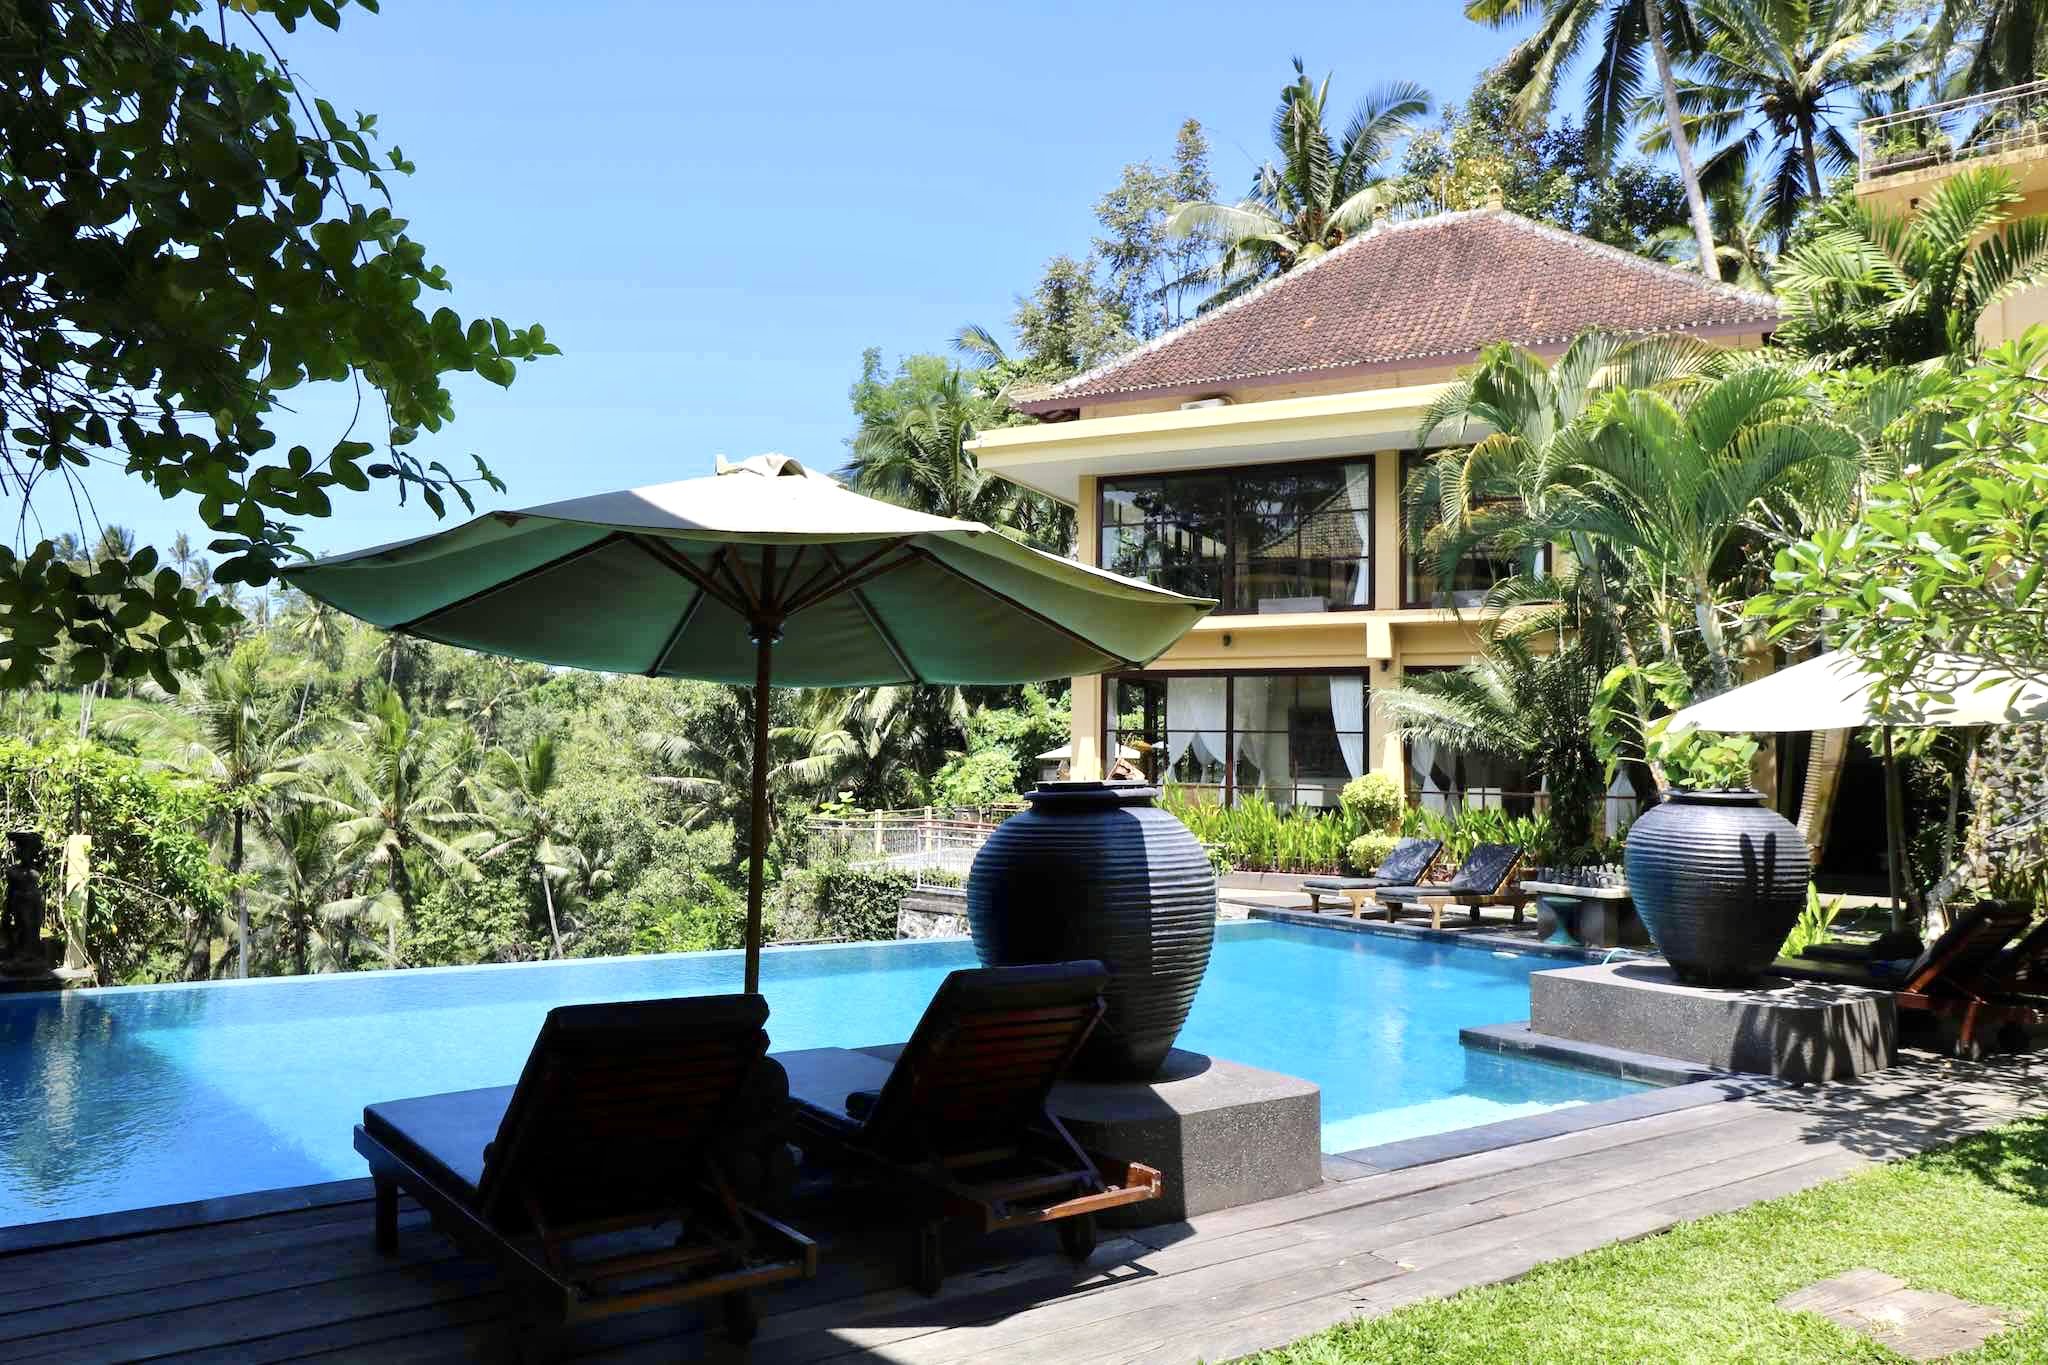 Bali villa.jpg